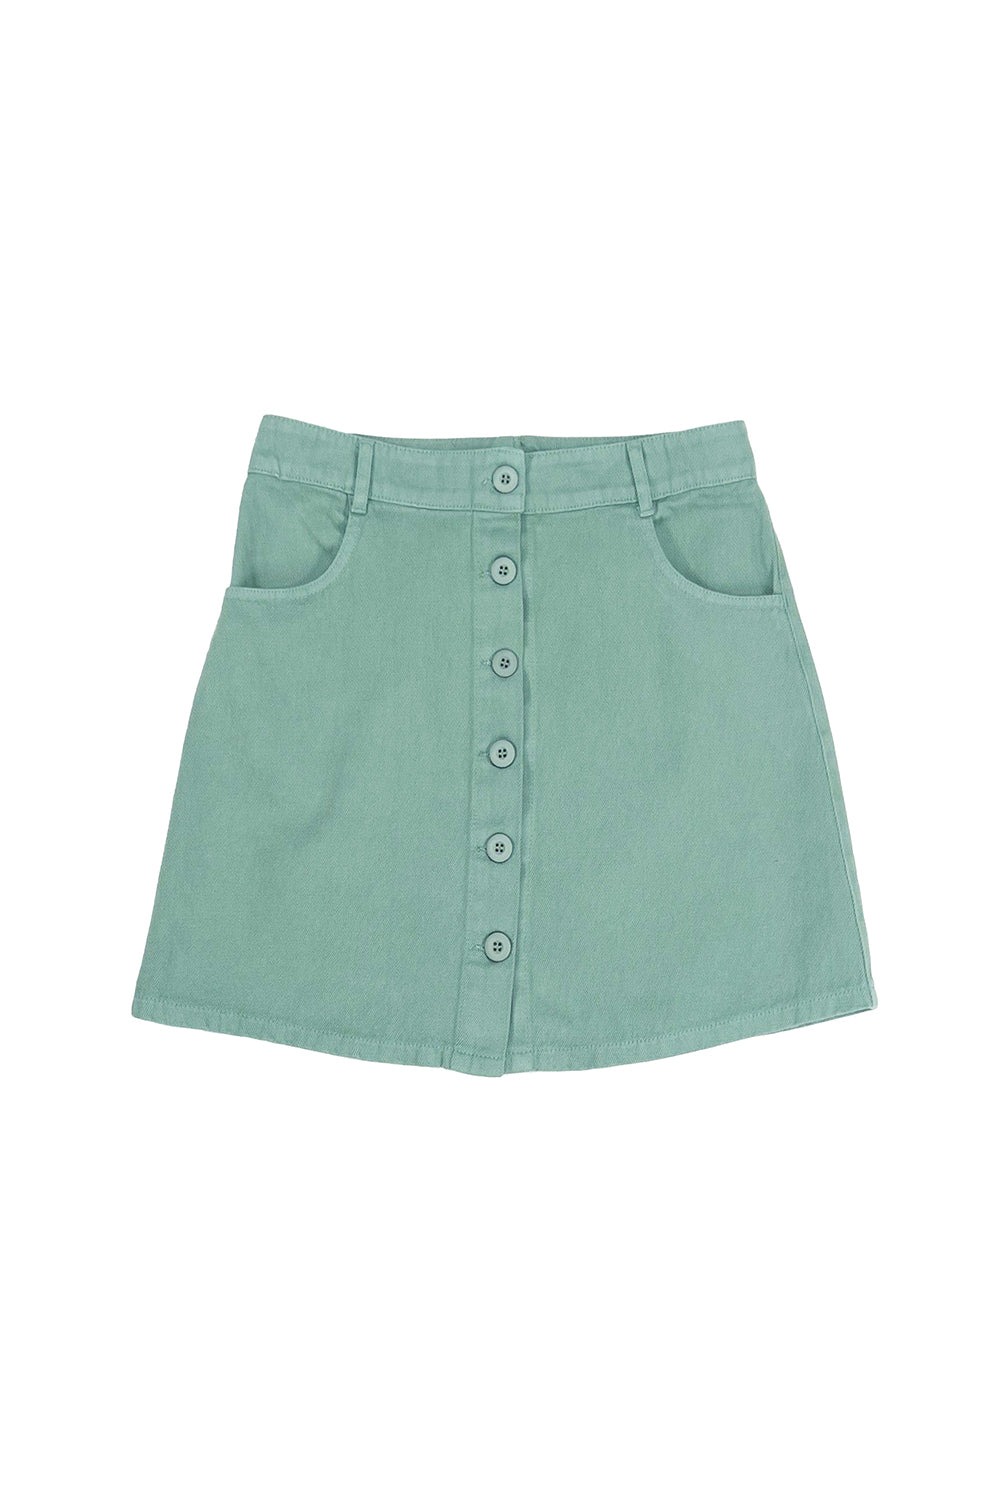 Vassar Skirt | Jungmaven Hemp Clothing & Accessories / Color: Sage Green